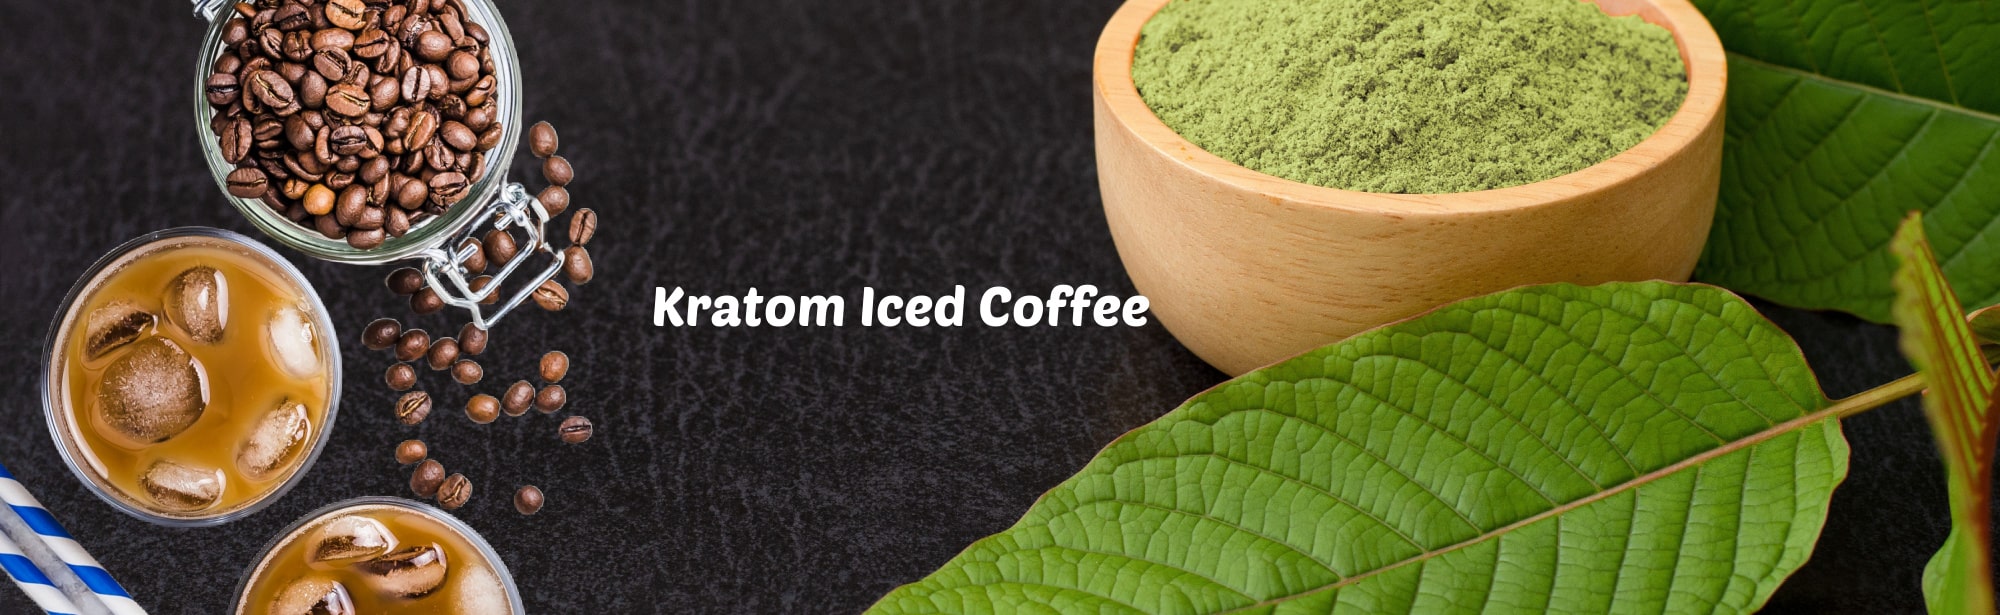 image of kratom iced coffee